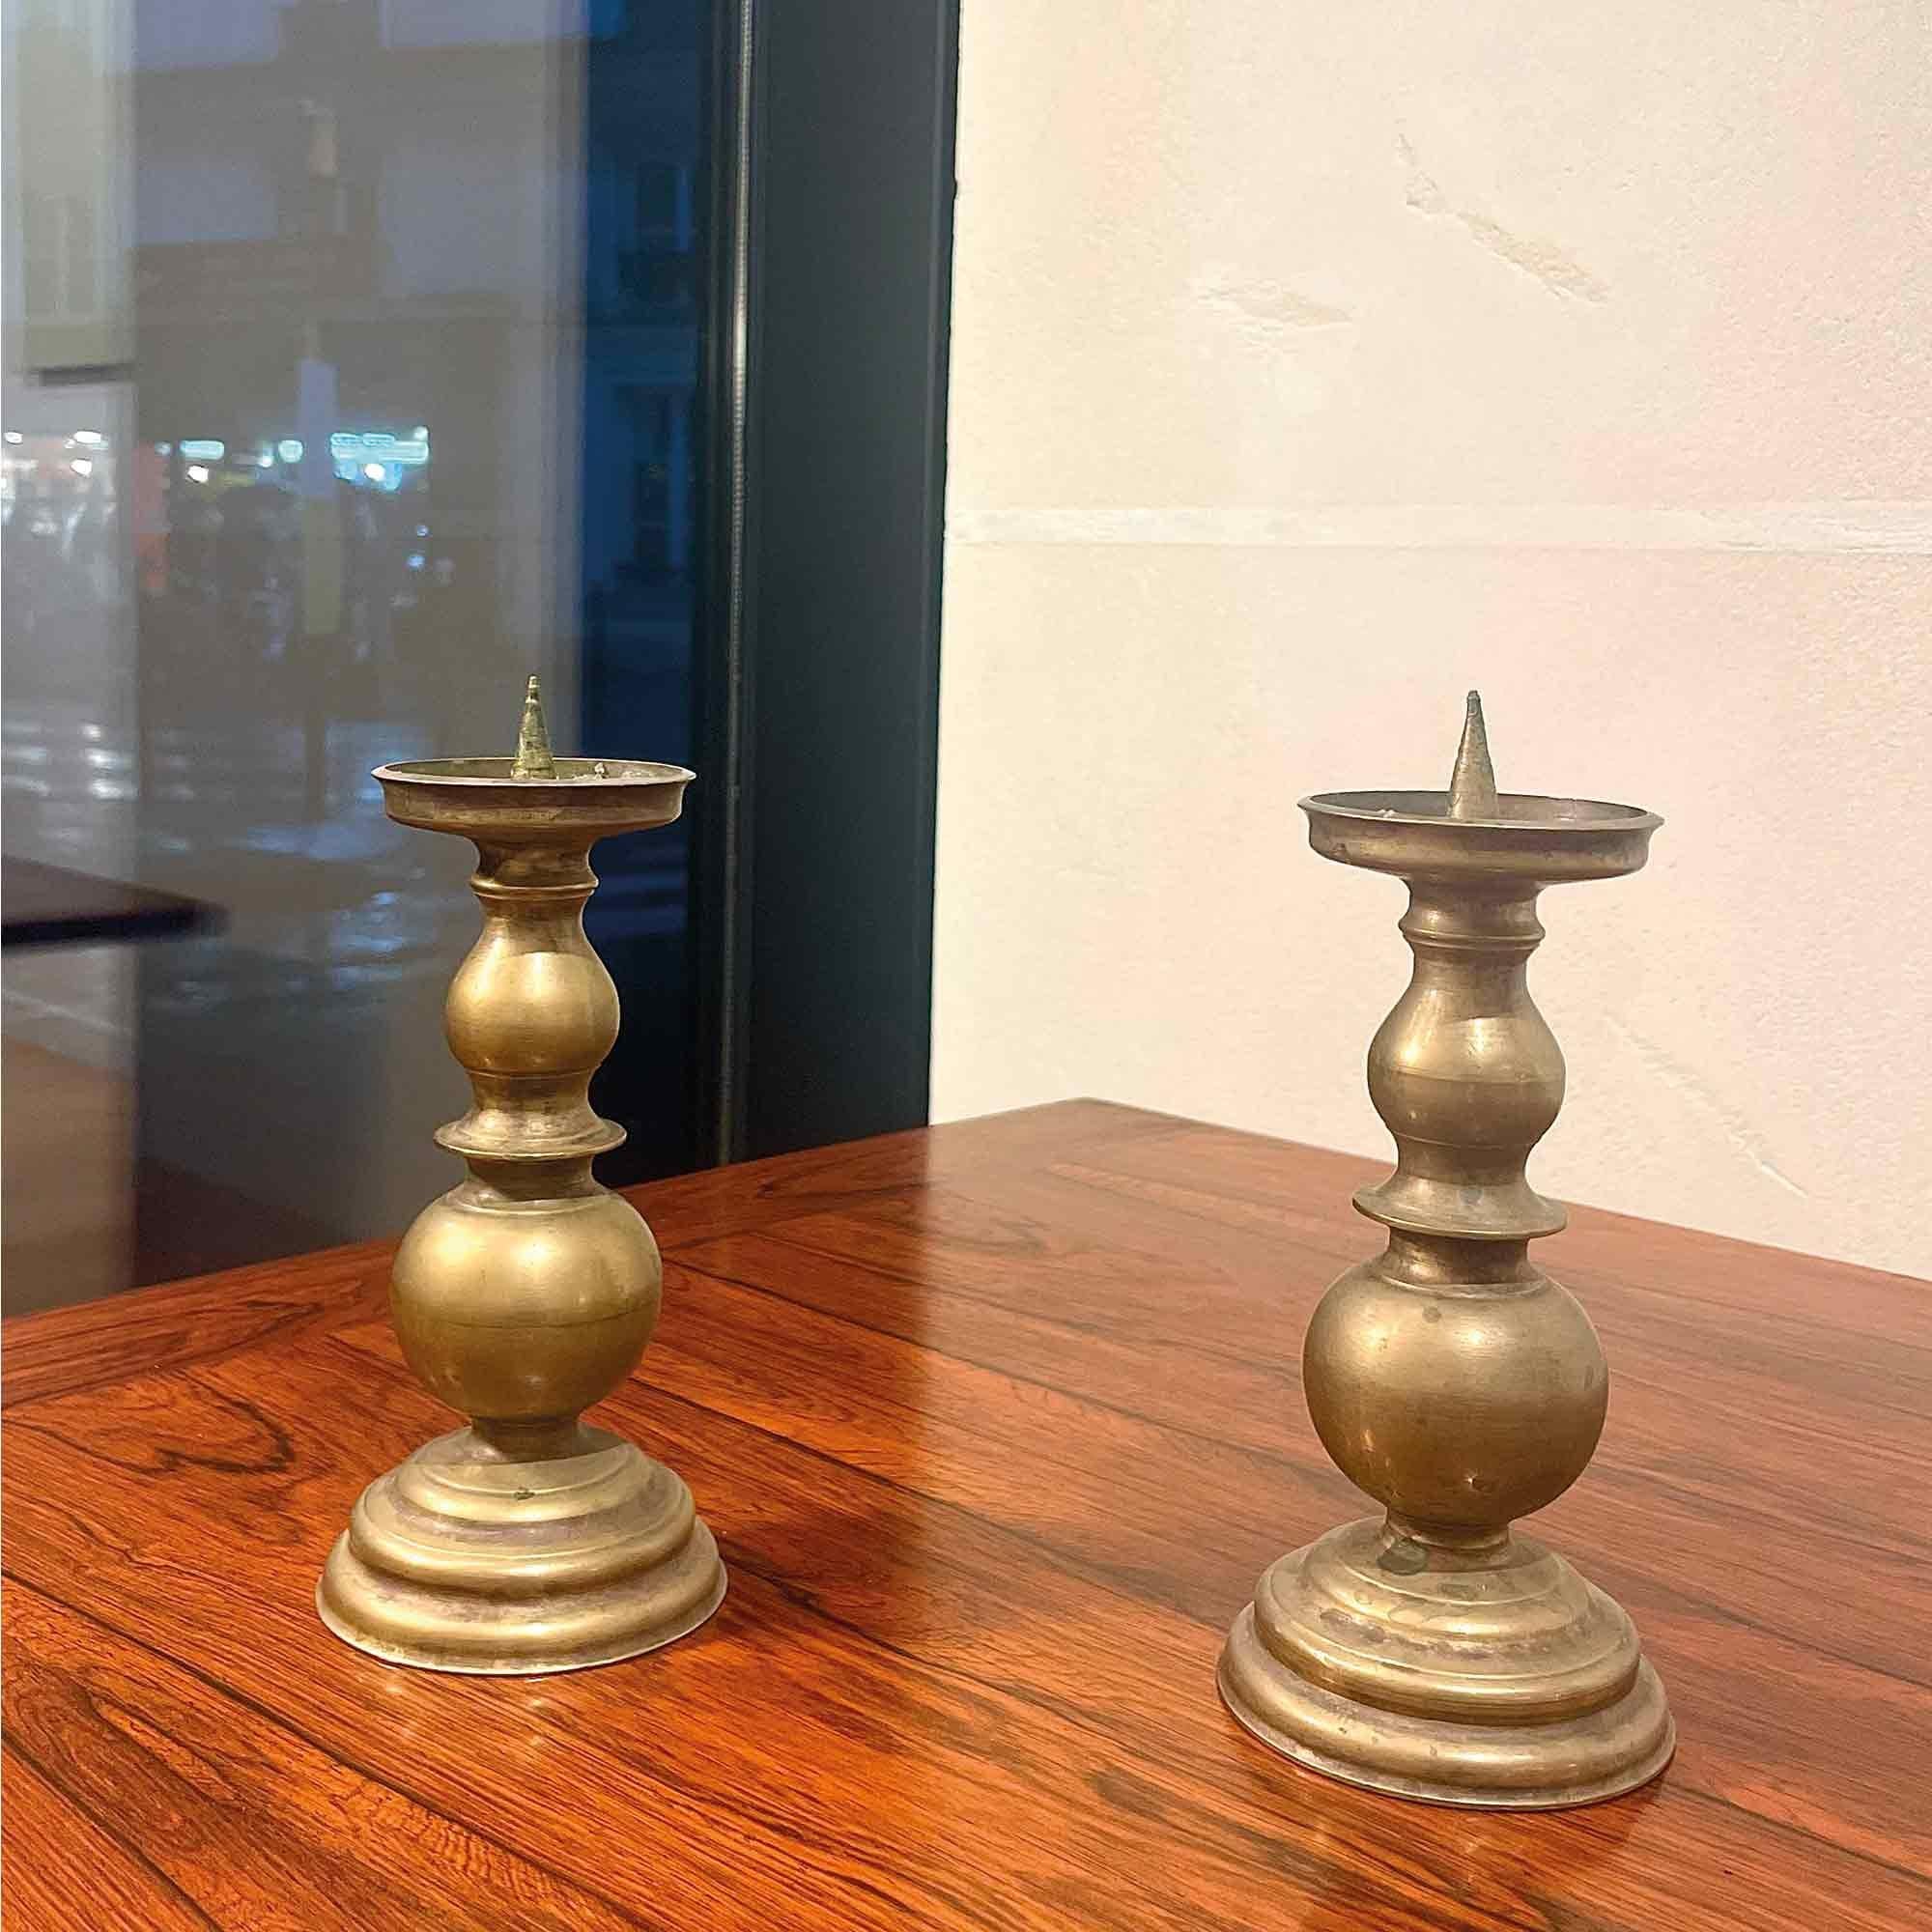 Brushed Pair of vintage brass candlesticks For Sale